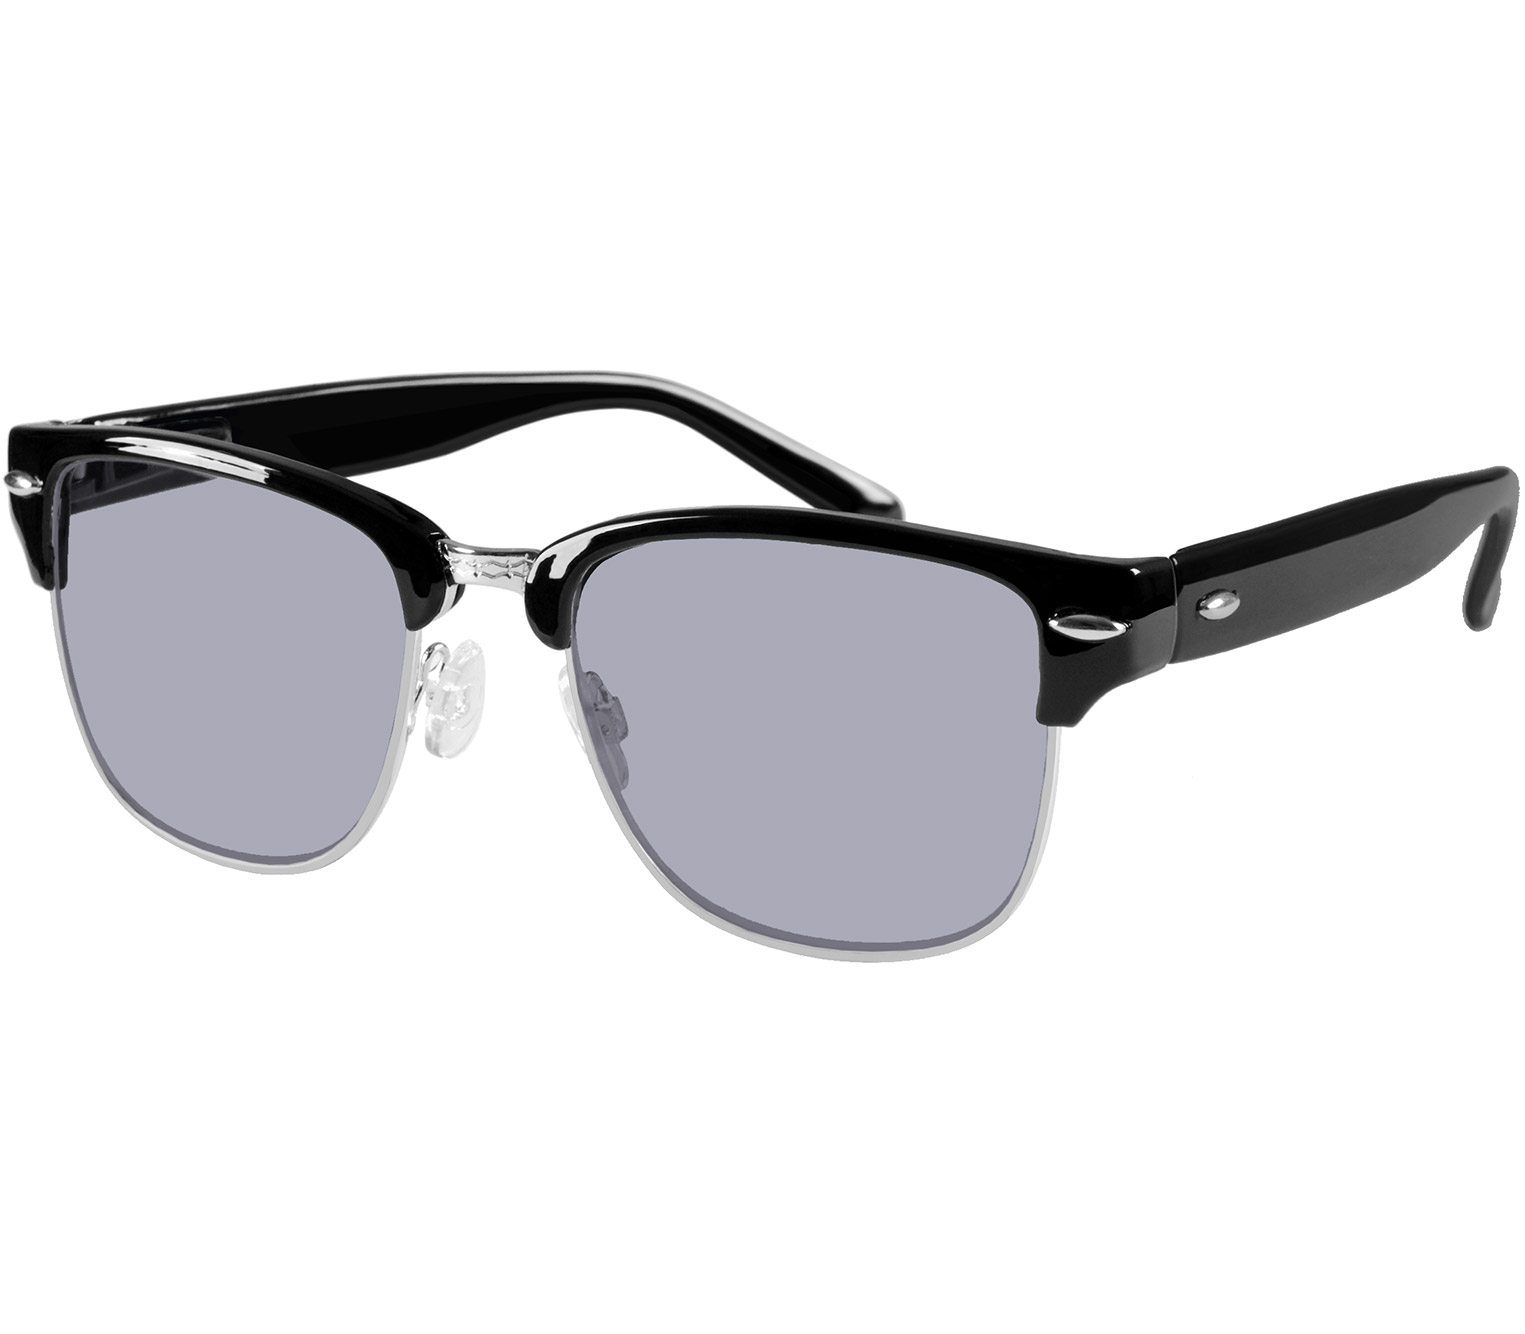 Main Image (Angle) - Capital (Black) Sunglasses